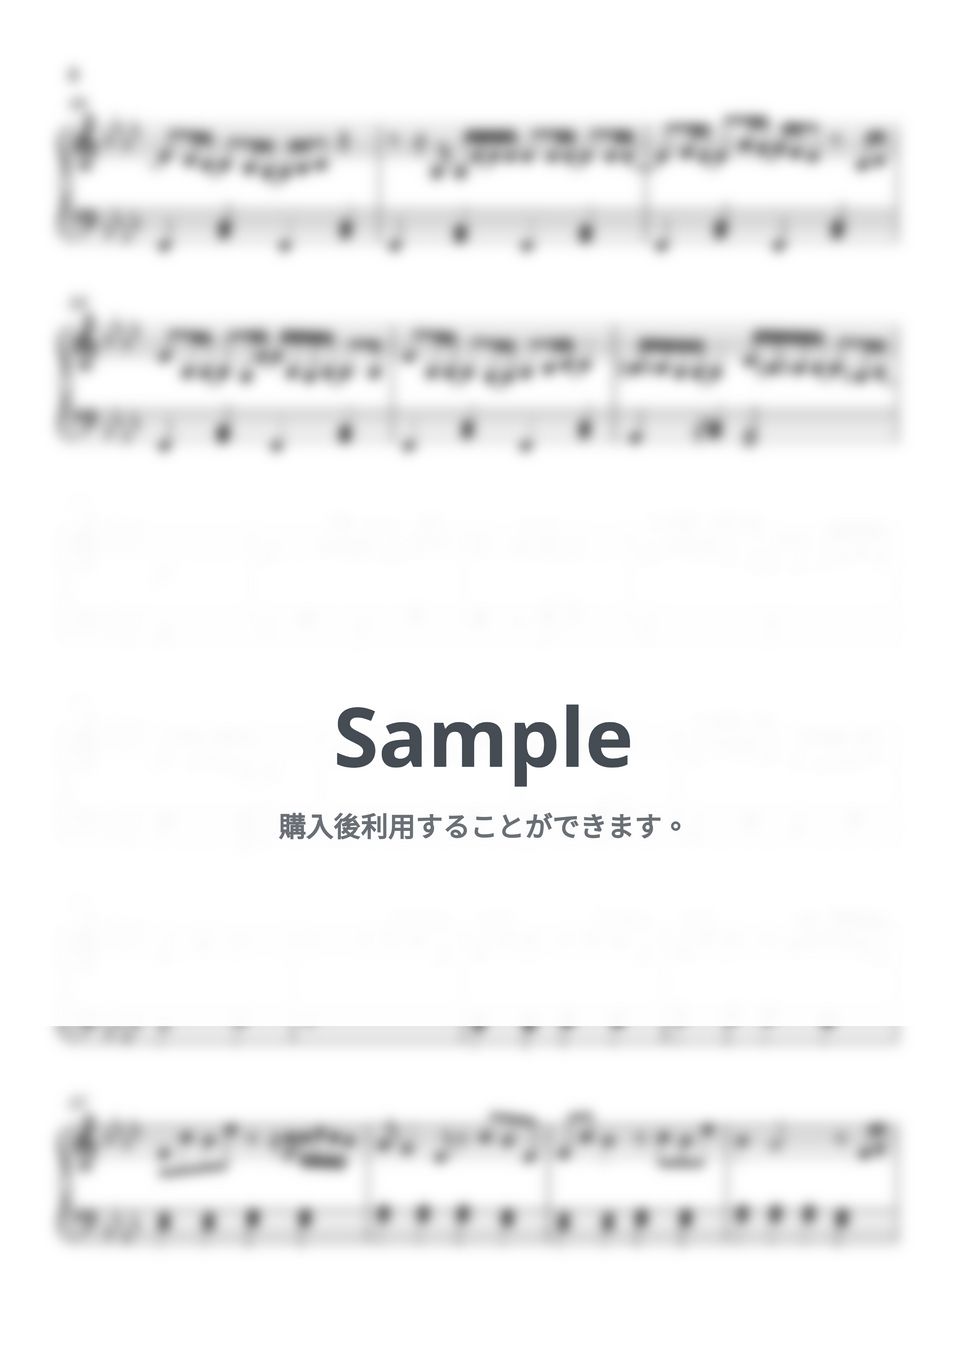 Aimer - RE: I AM (機動戦士ガンダム / ピアノ楽譜 / 初心者〜初級) by Piano Lovers. jp